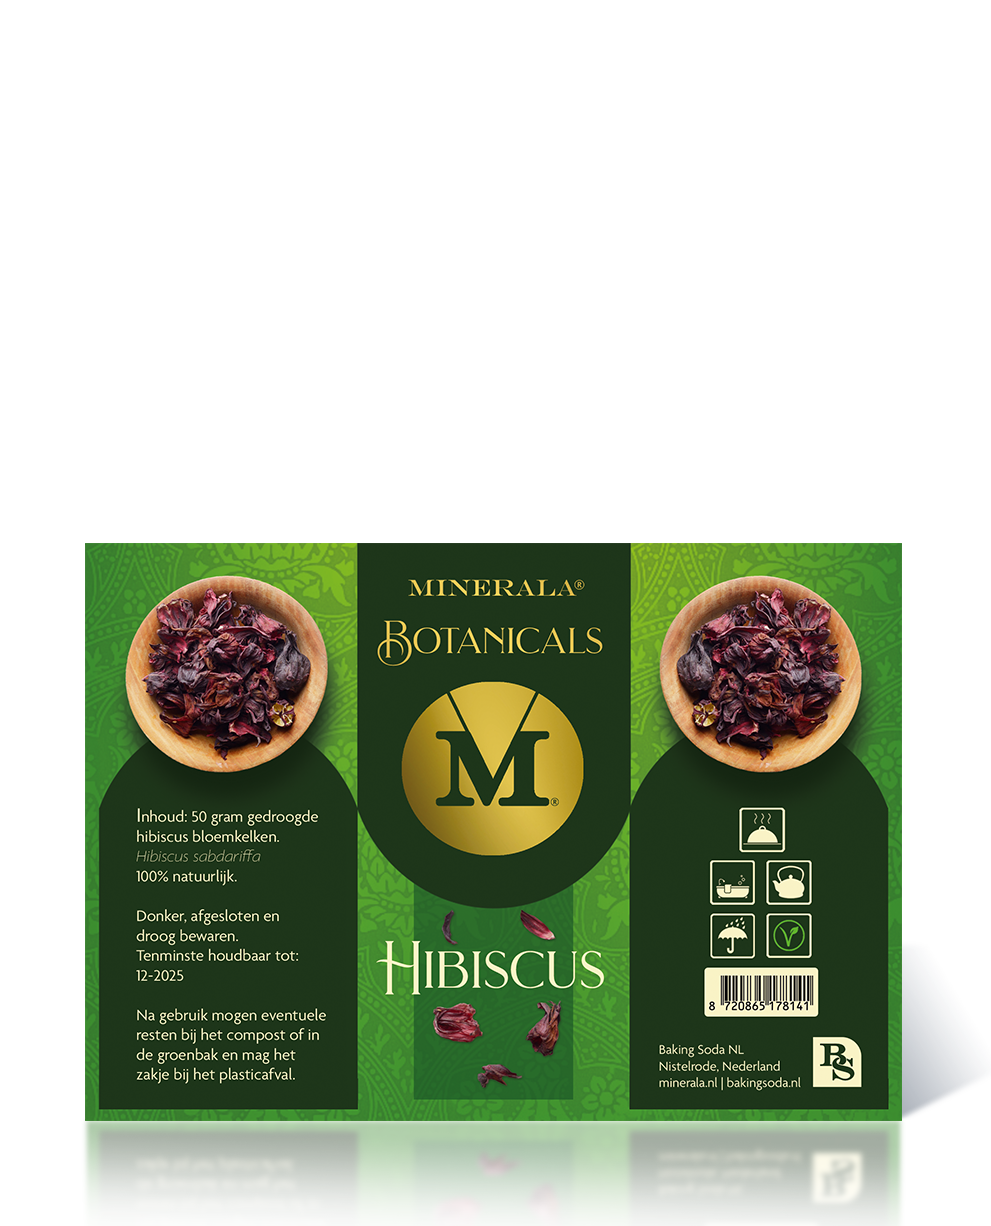 Minerala Botanicals hibiscus. Baking Soda NL